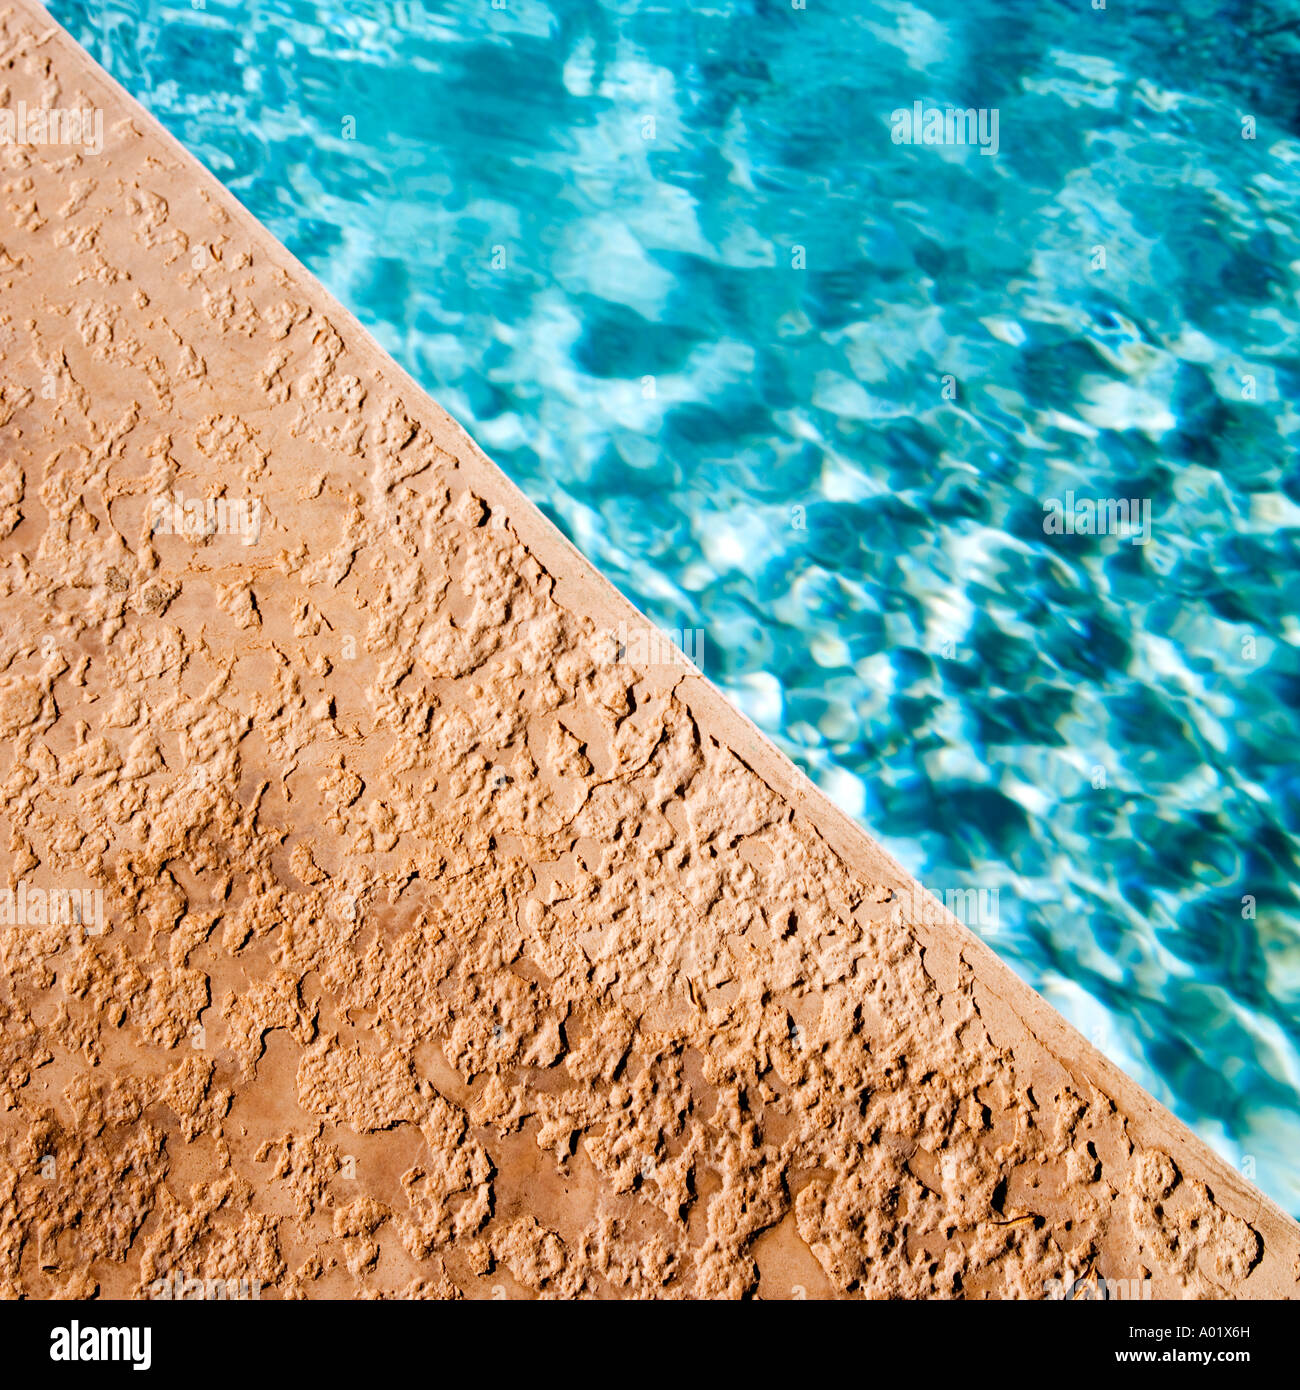 Blauwasser am Rande eines Swimmingpools Stockfoto